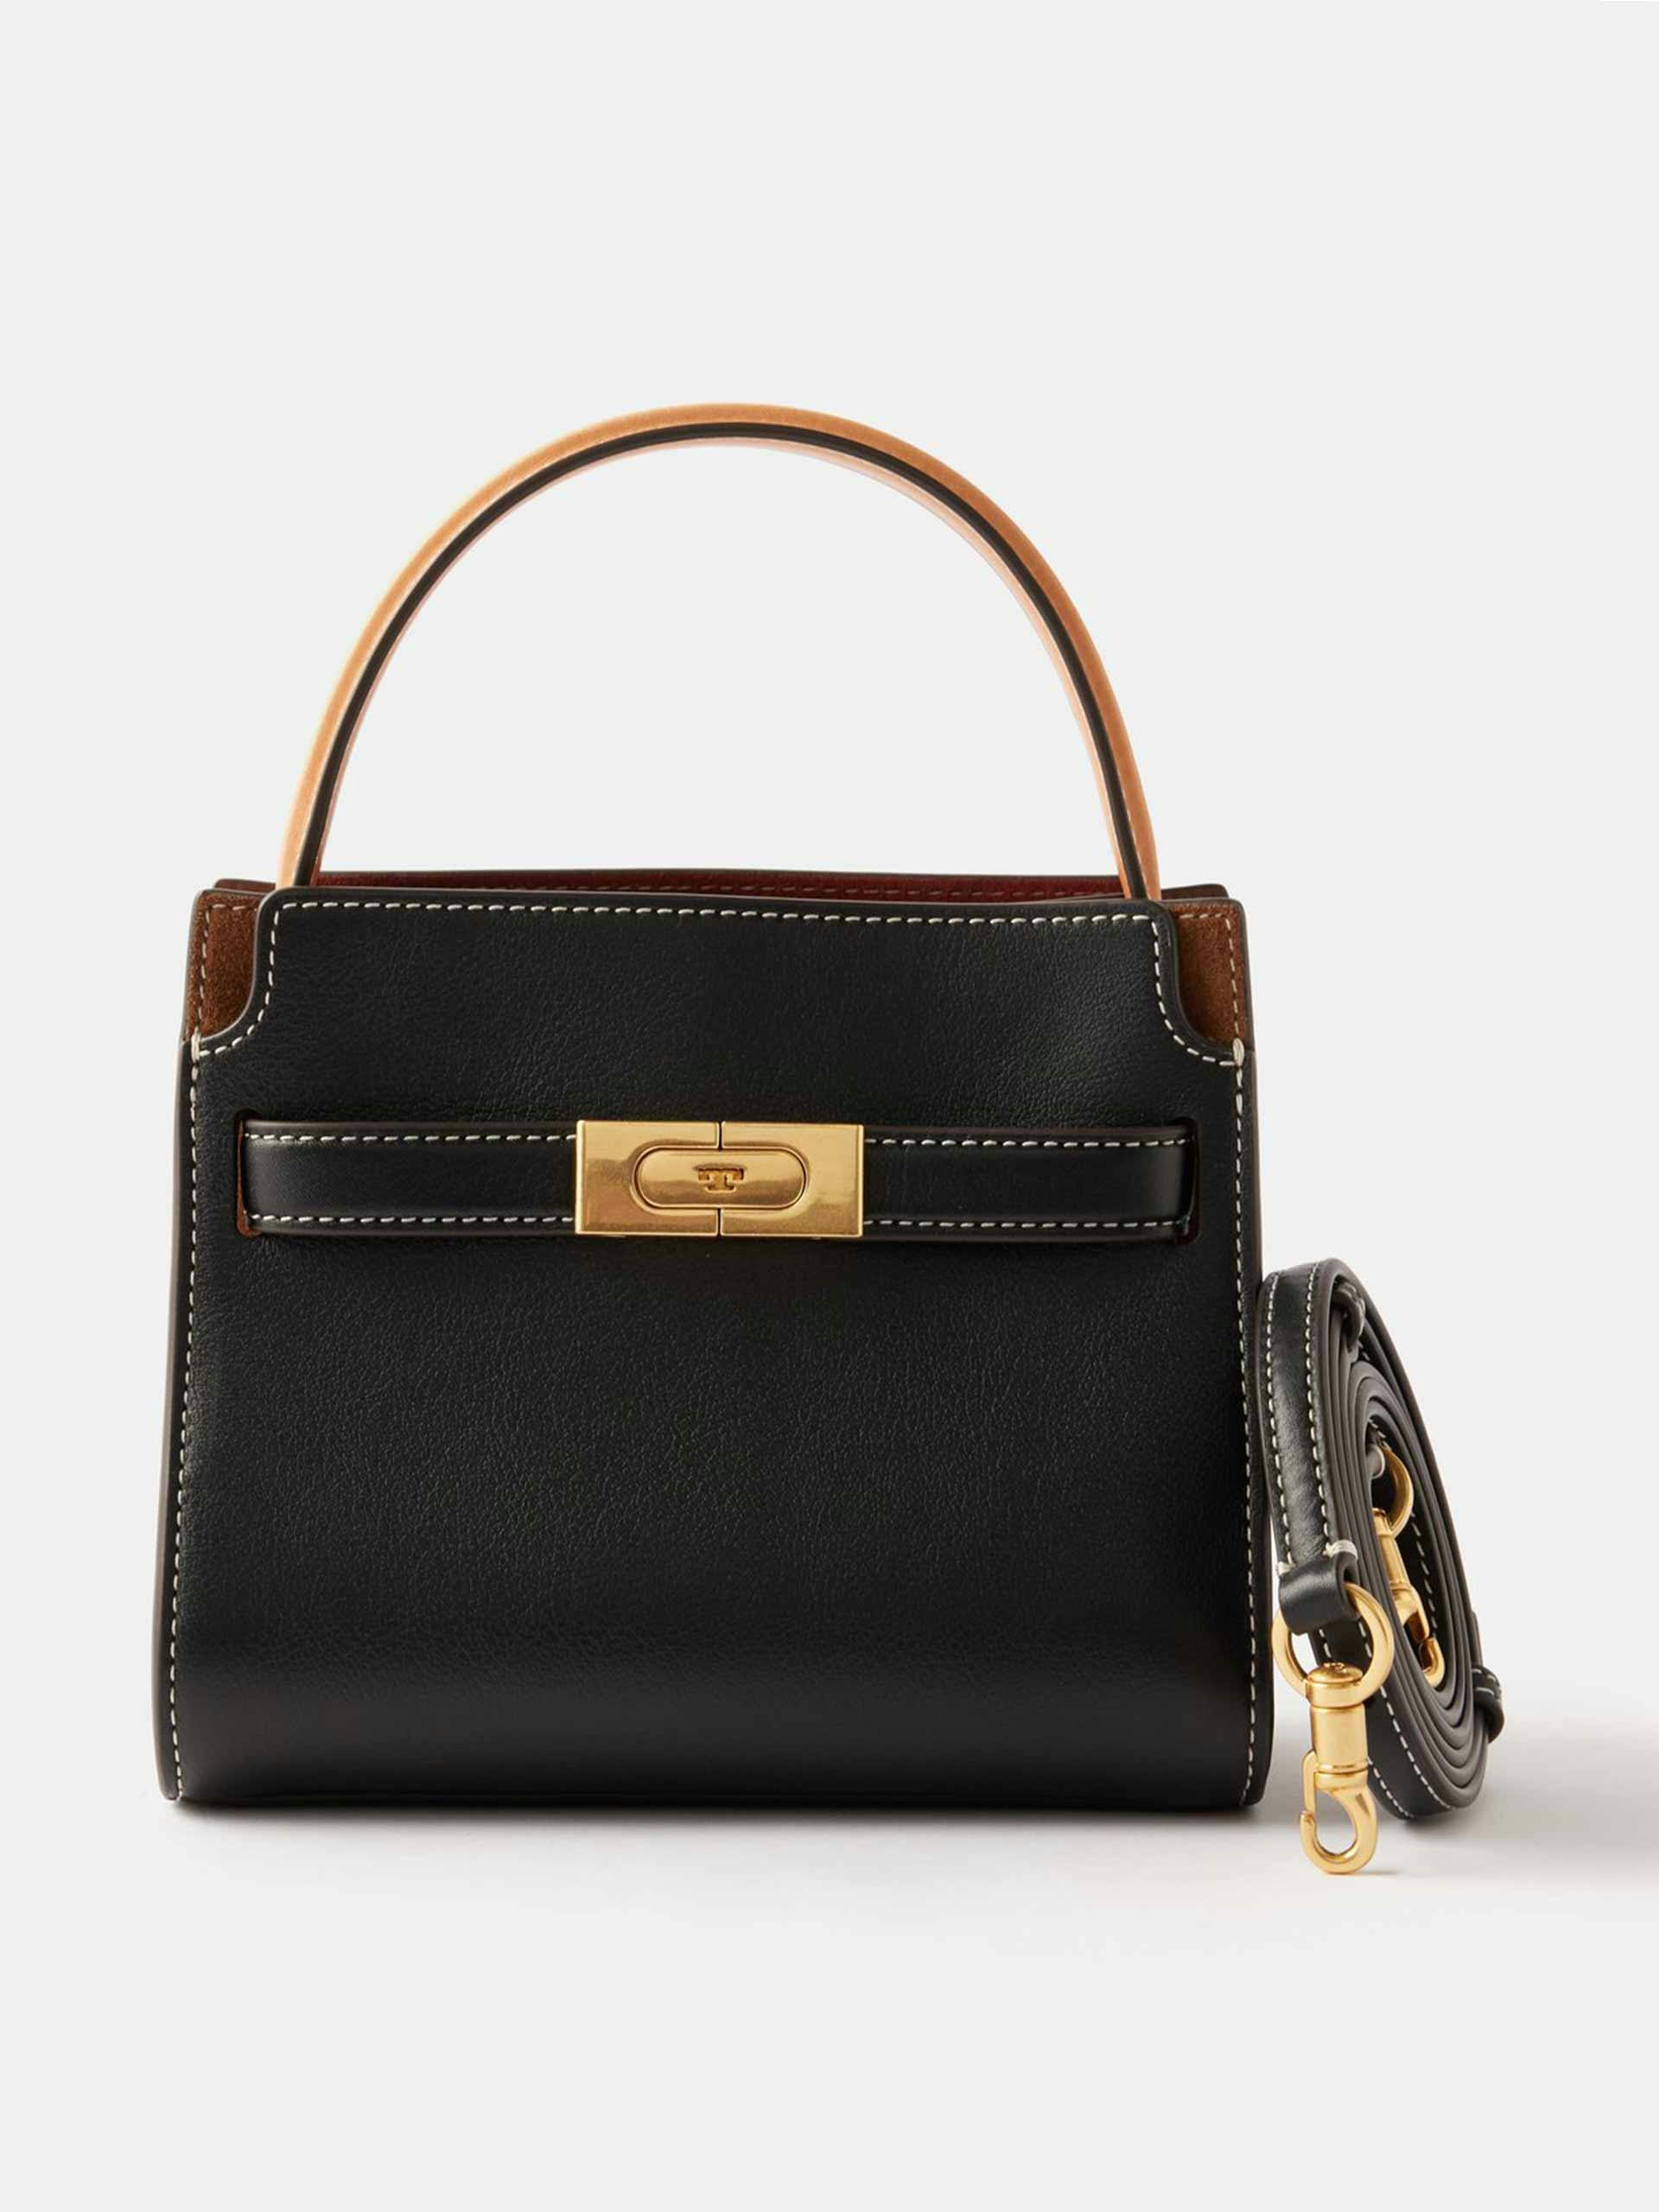 Lee Radziwill petite leather handbag